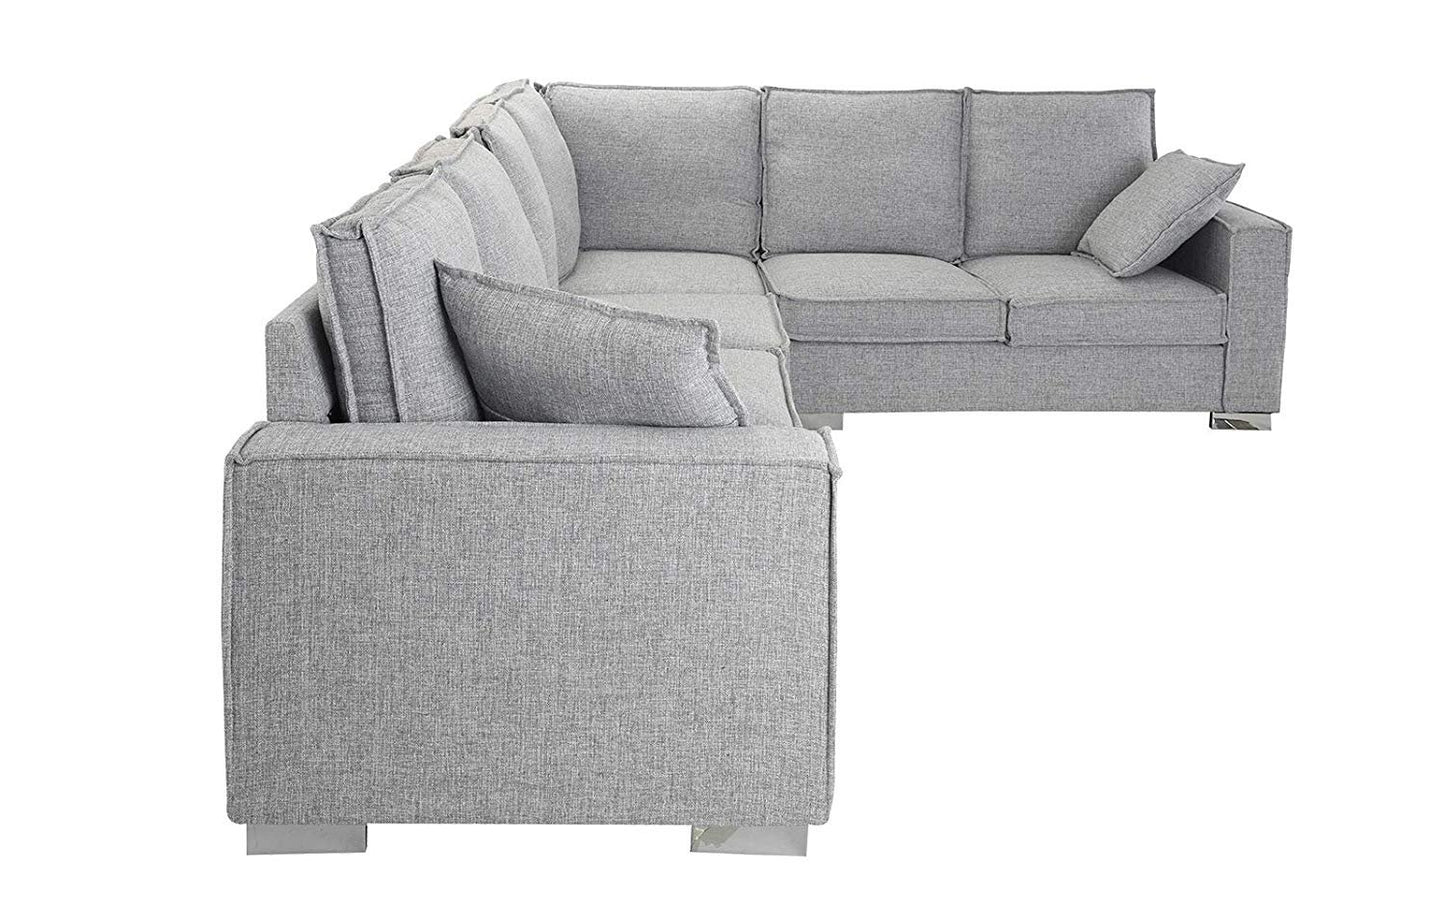 TITAN 6 Seater Large Living Room Fabric L-Shape Sectional Sofa